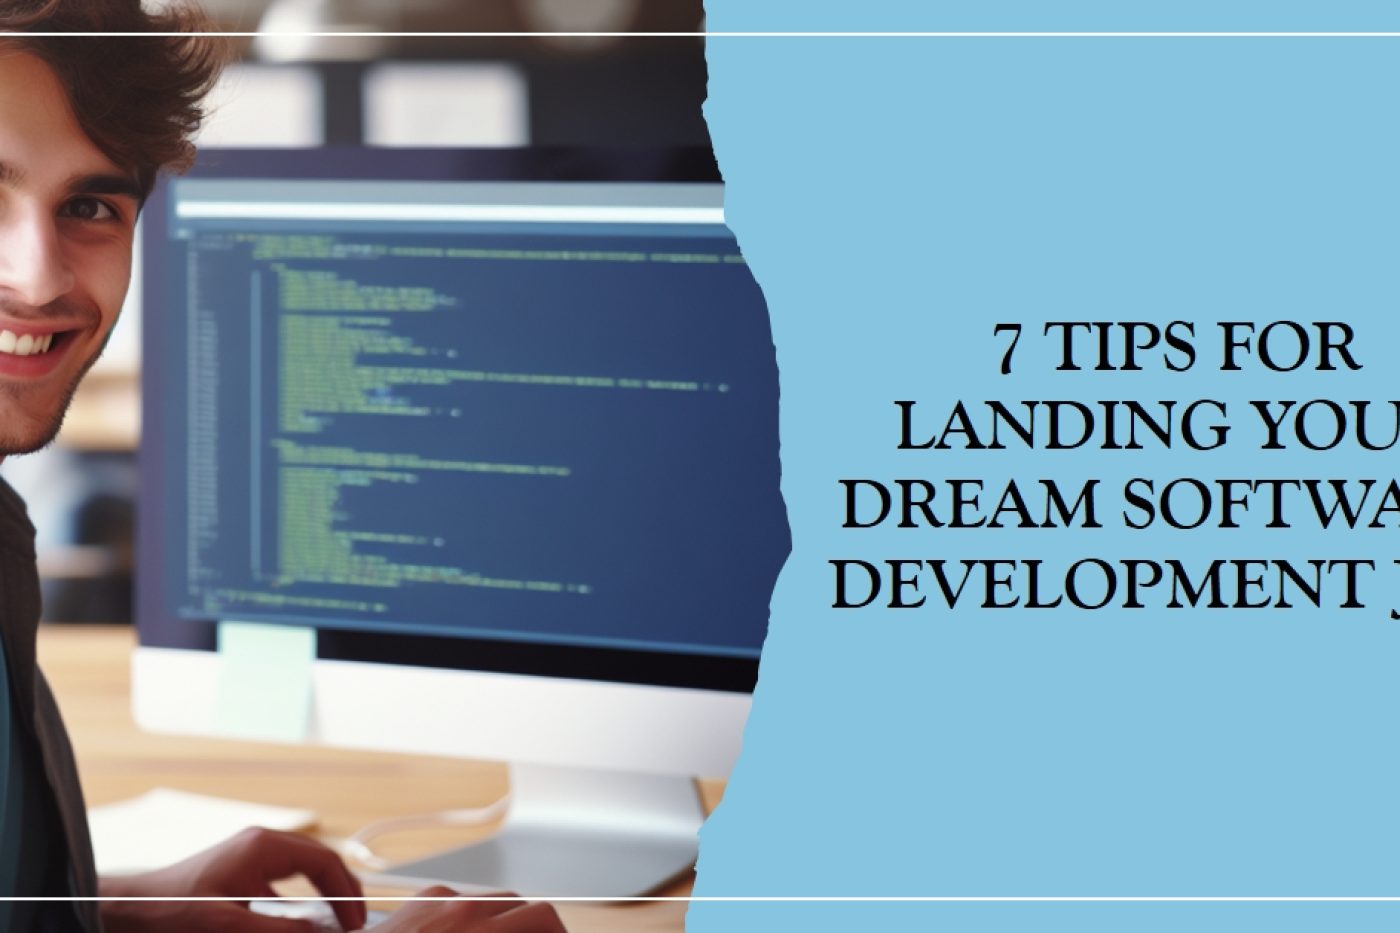 7 Tips for Landing Your Dream Software Development Job